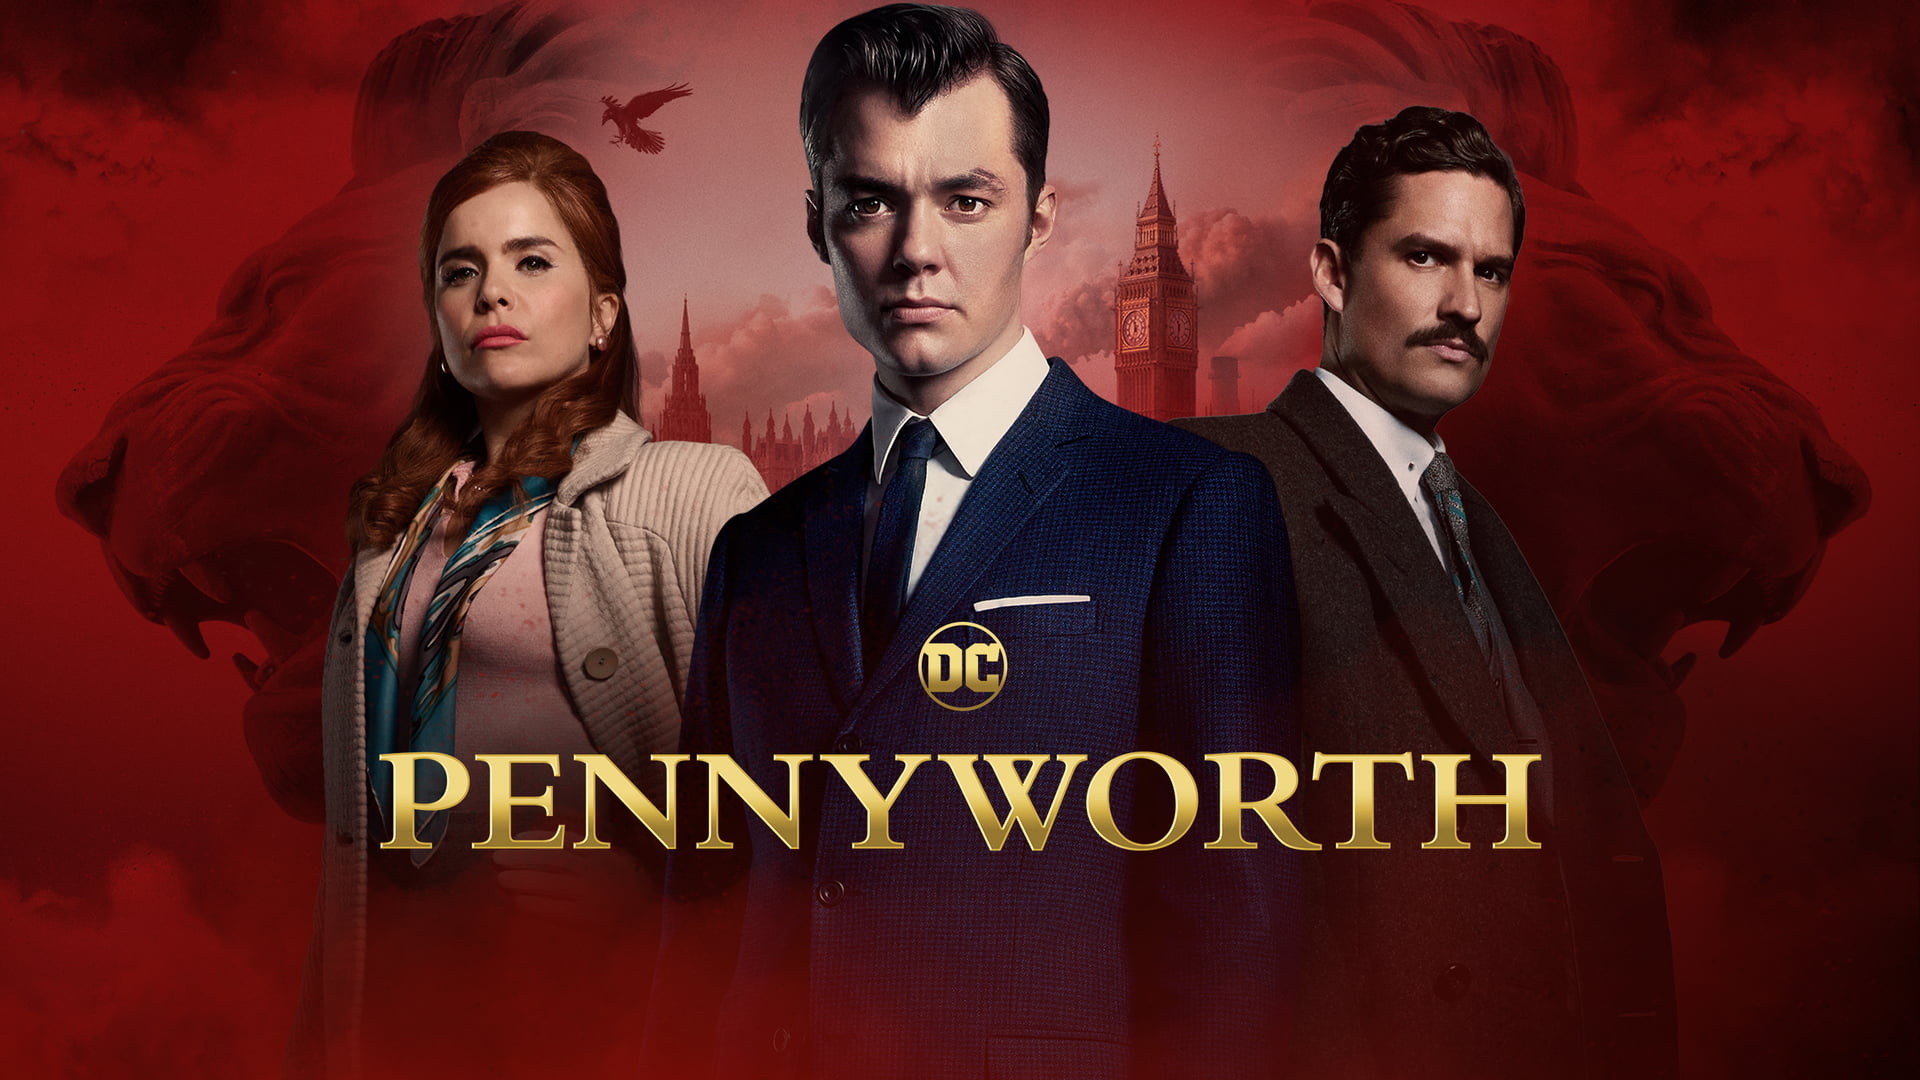 Paloma Faith, Pennyworth Season 2, Trailer, Release Date, 1920x1080 Full HD Desktop